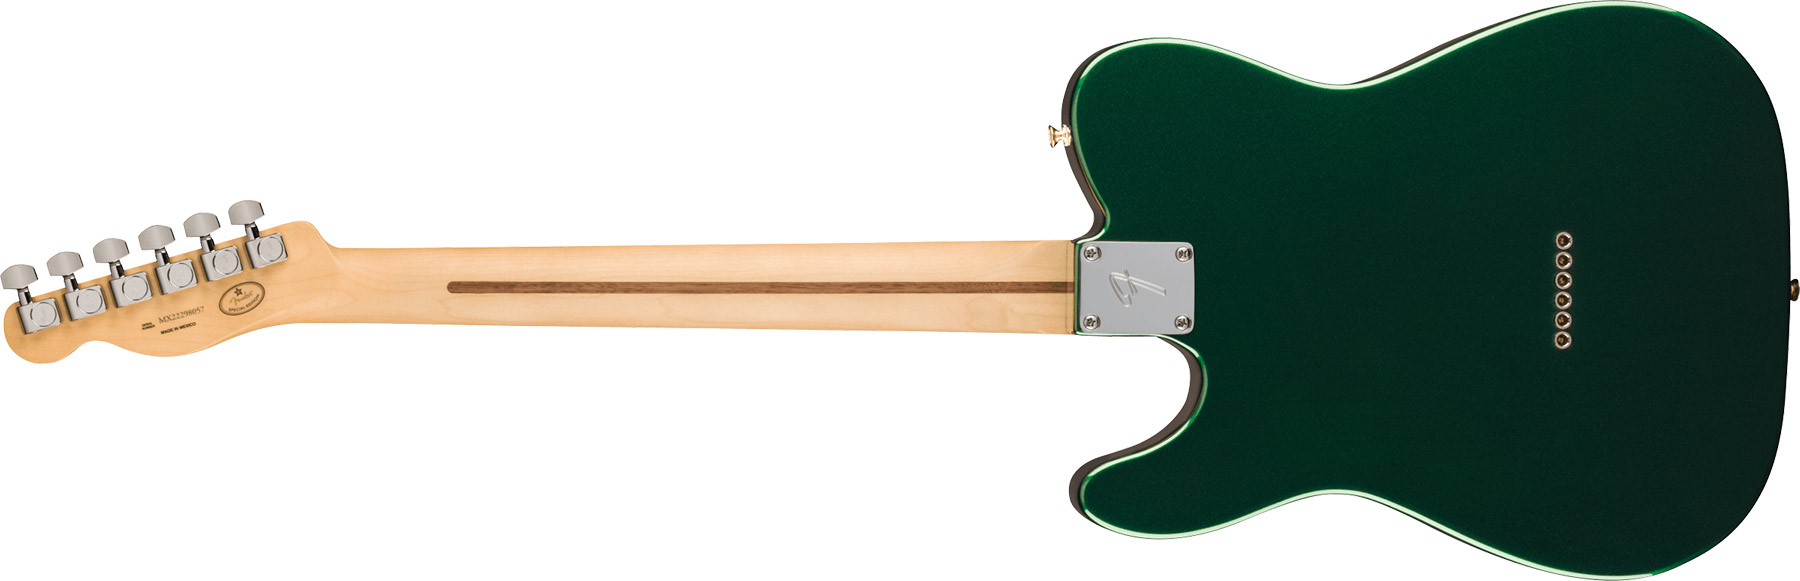 Fender Tele Player Ltd Mex 2s Seymour Duncan Mn - British Racing Green - Televorm elektrische gitaar - Variation 1